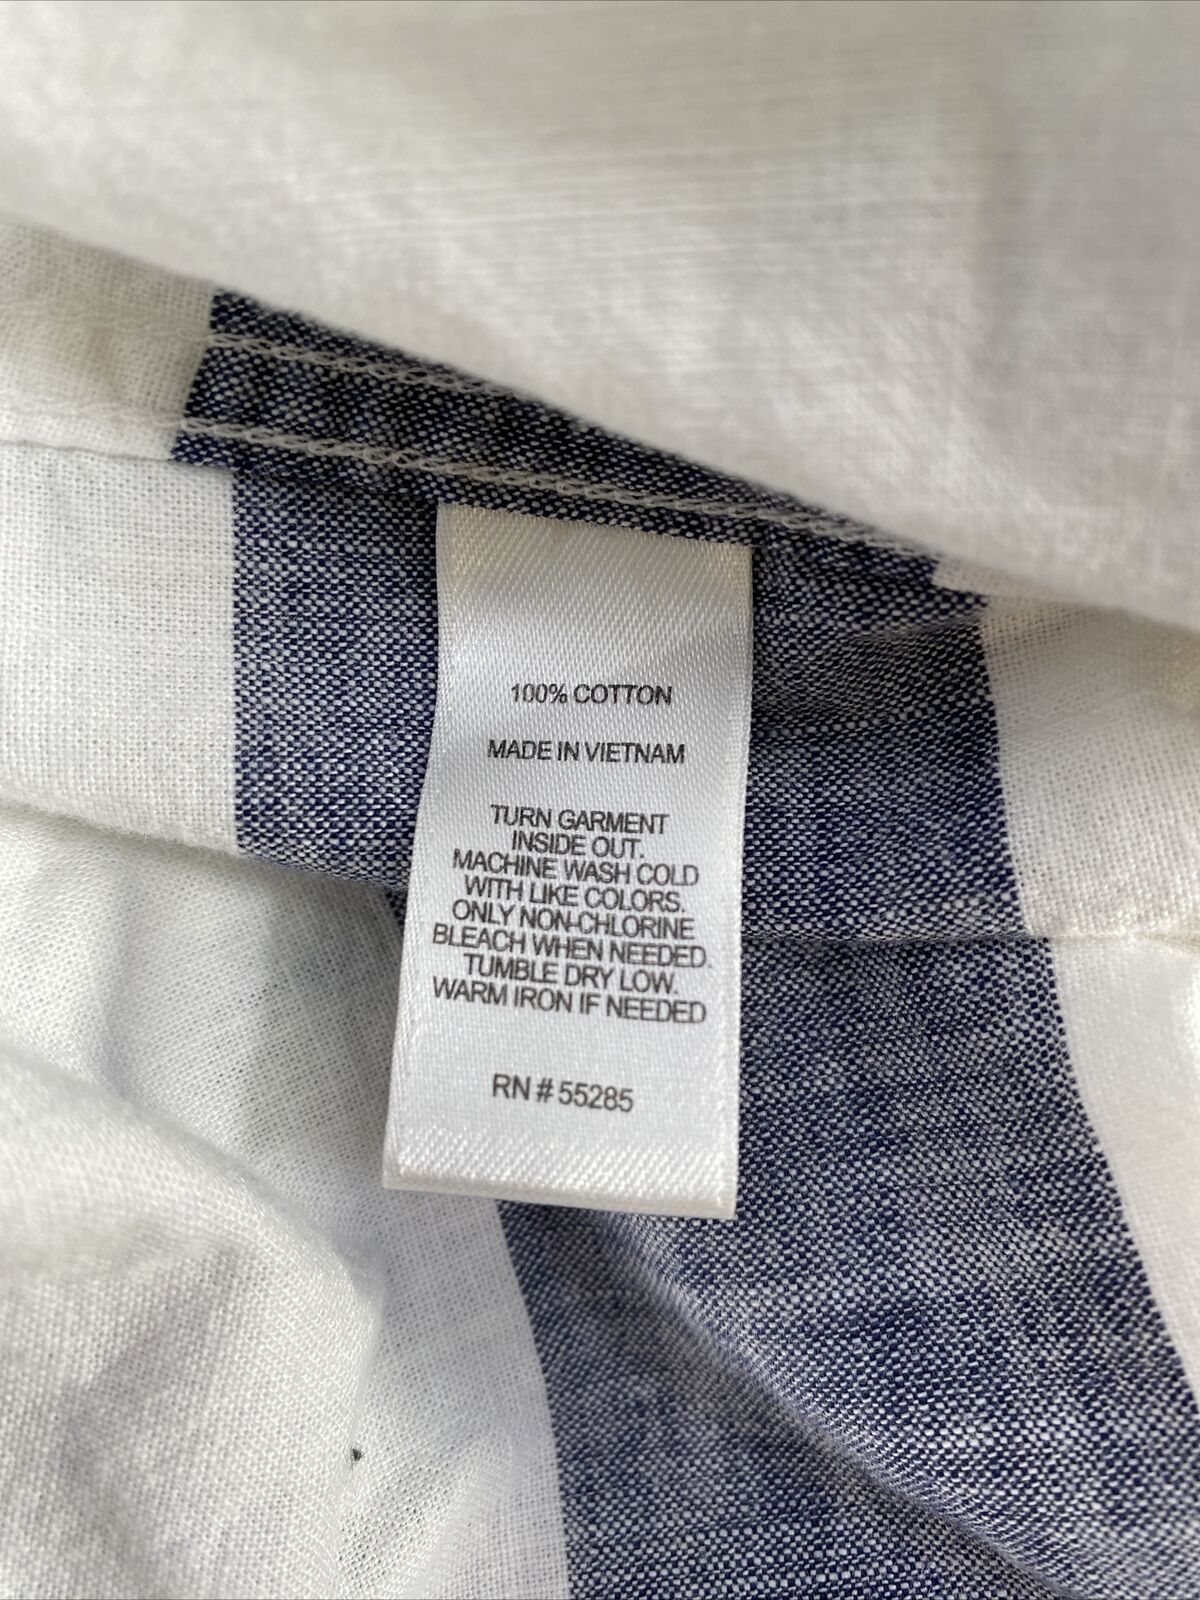 Express Men's Blue/White Soft Wash Short Sleeve Button Up Casual Shirt -M